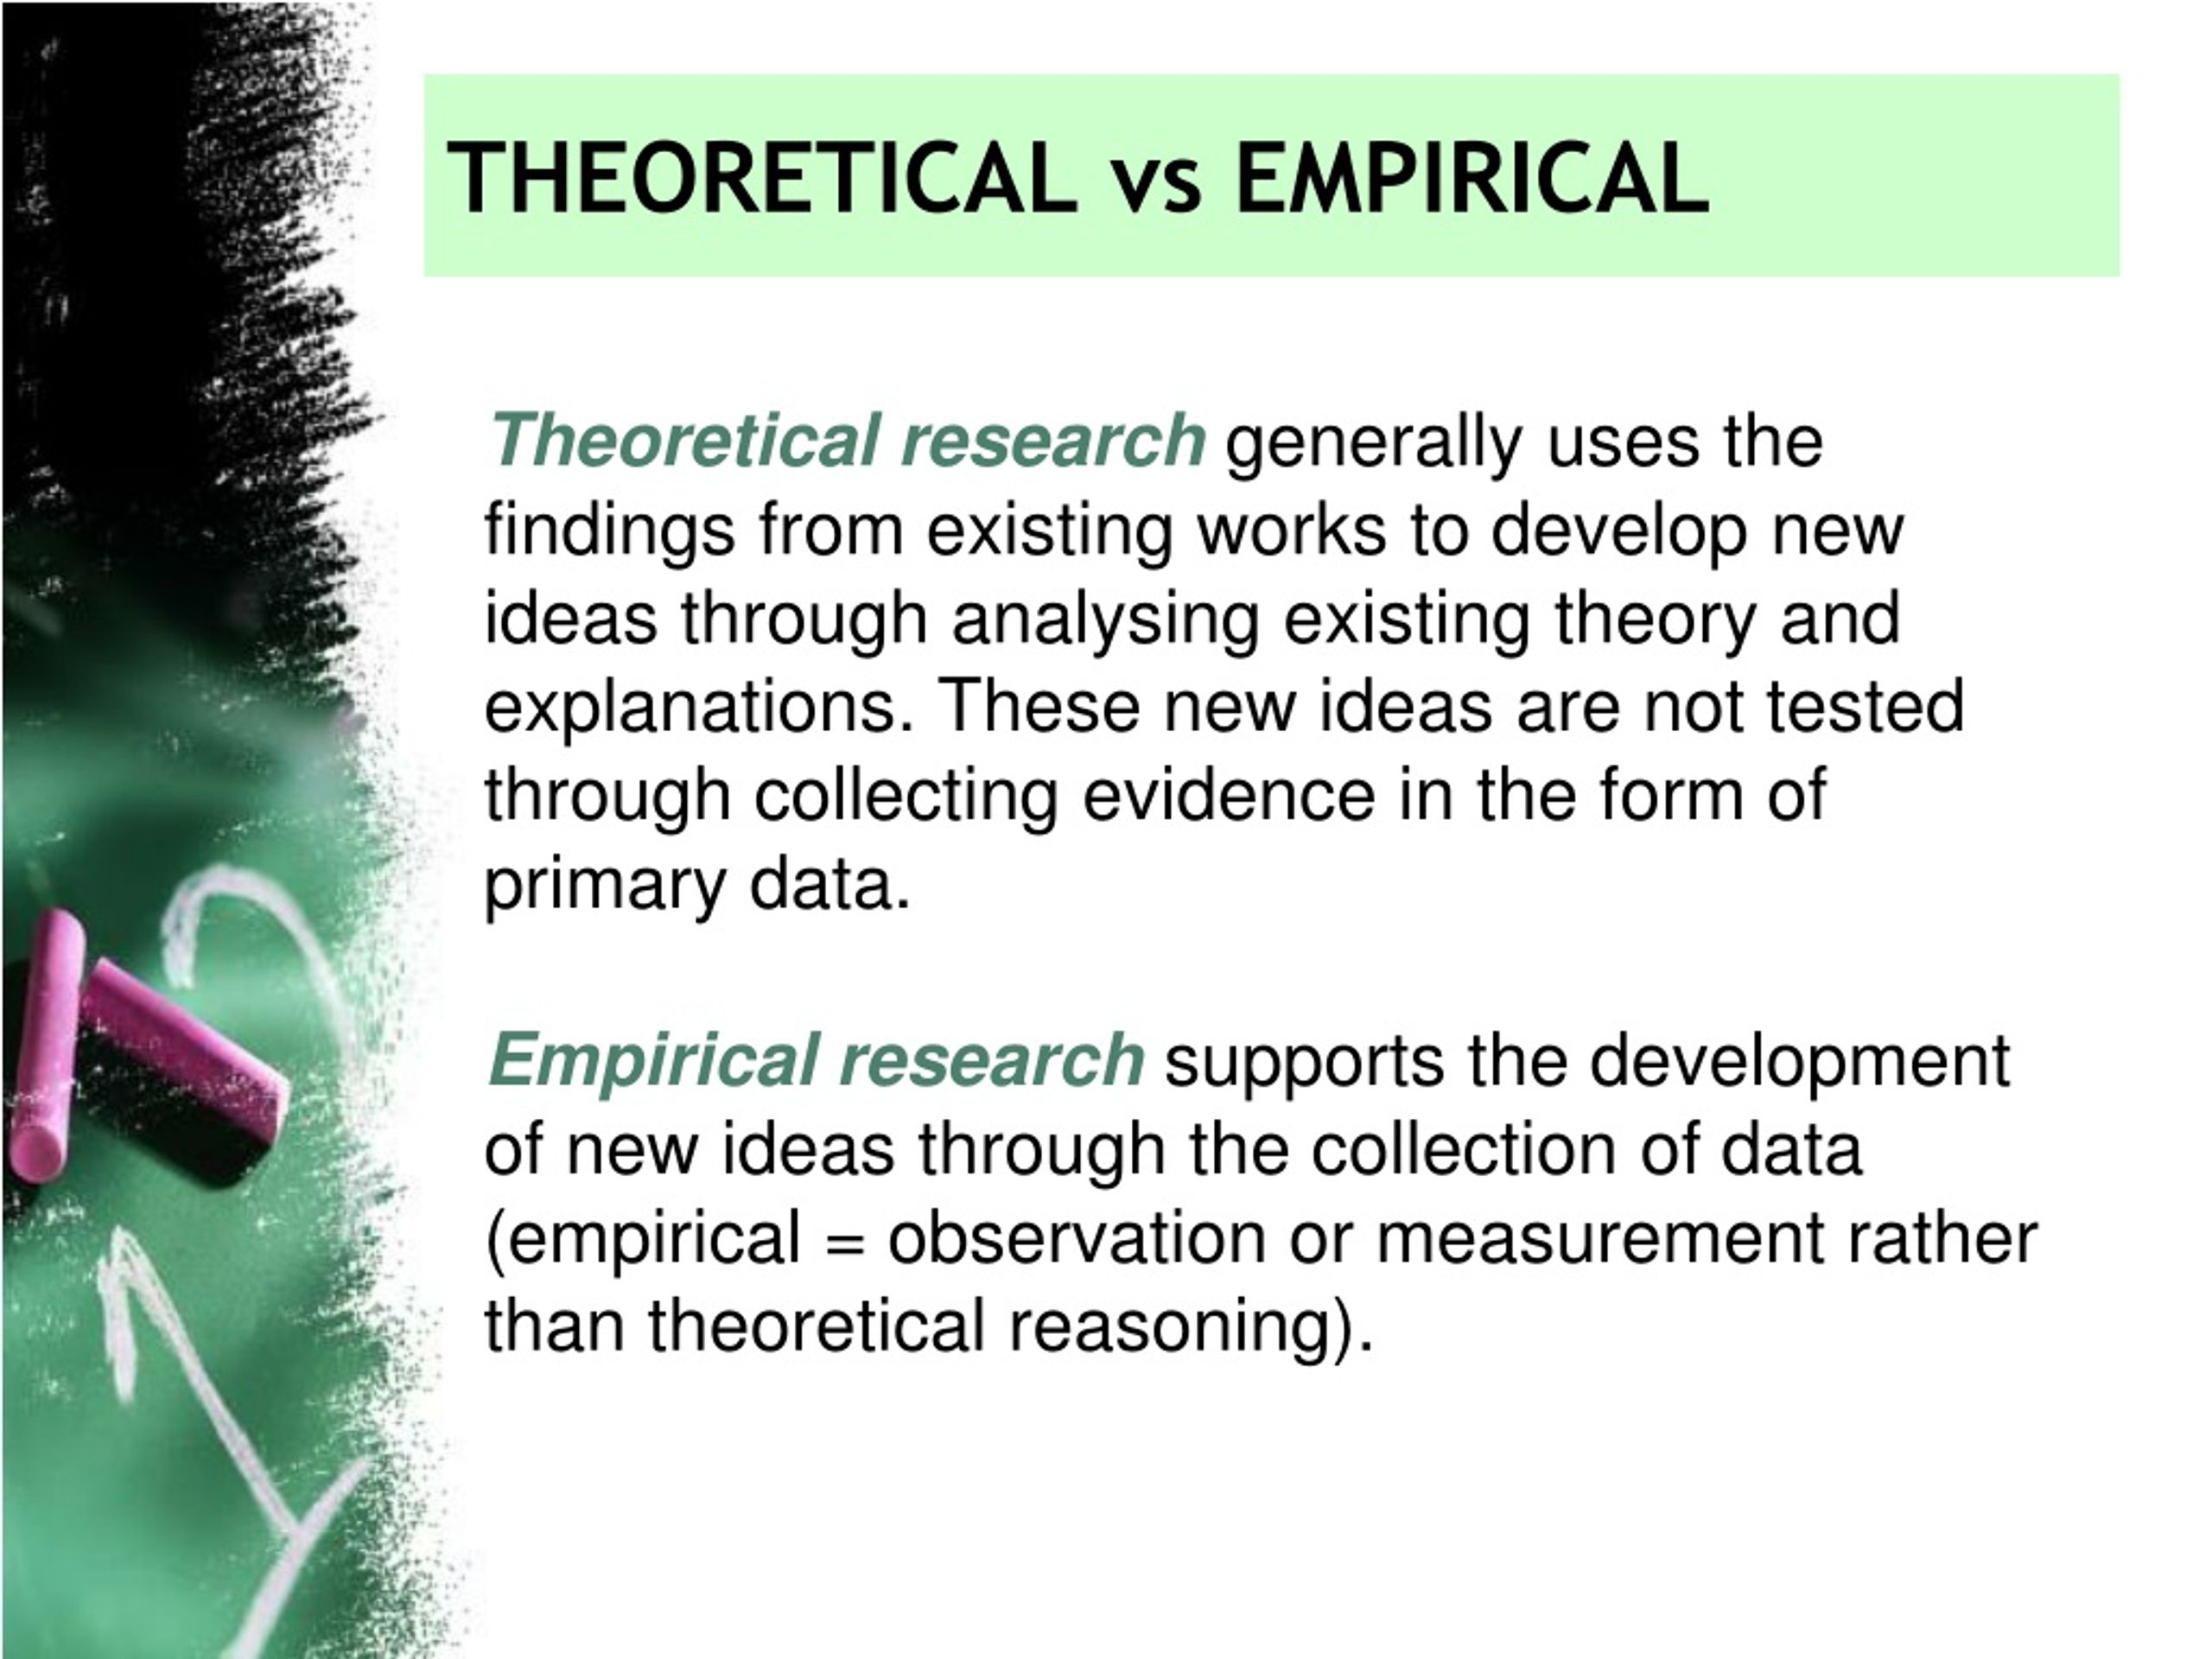 argumentative vs empirical research